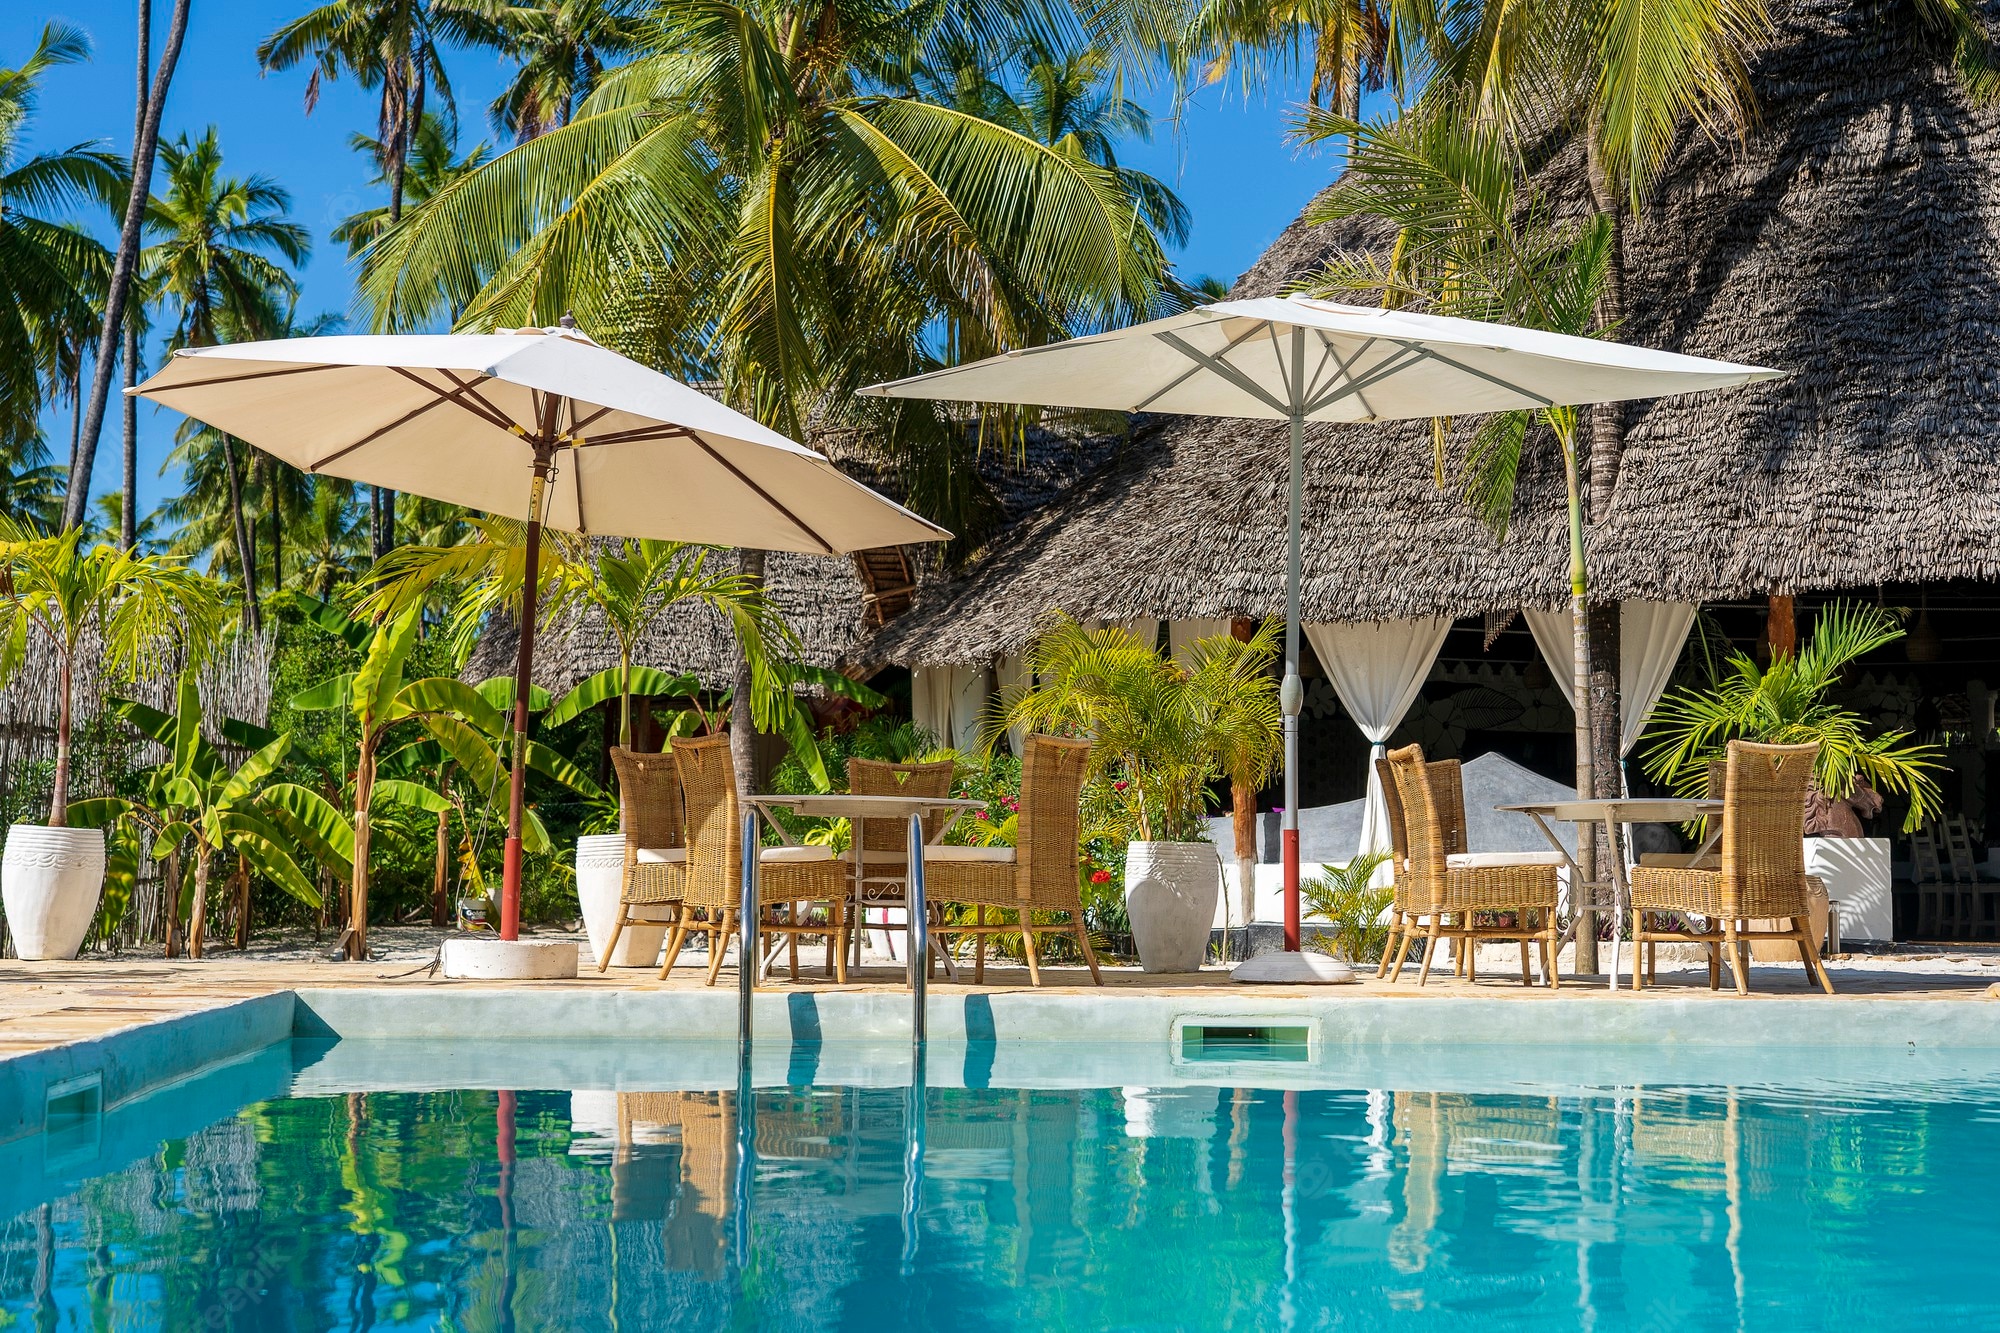 rest-zone-near-swimming-pool-tropical-beach-zanzibar-island-tanzania-africa-summer-travel-vacation-holiday